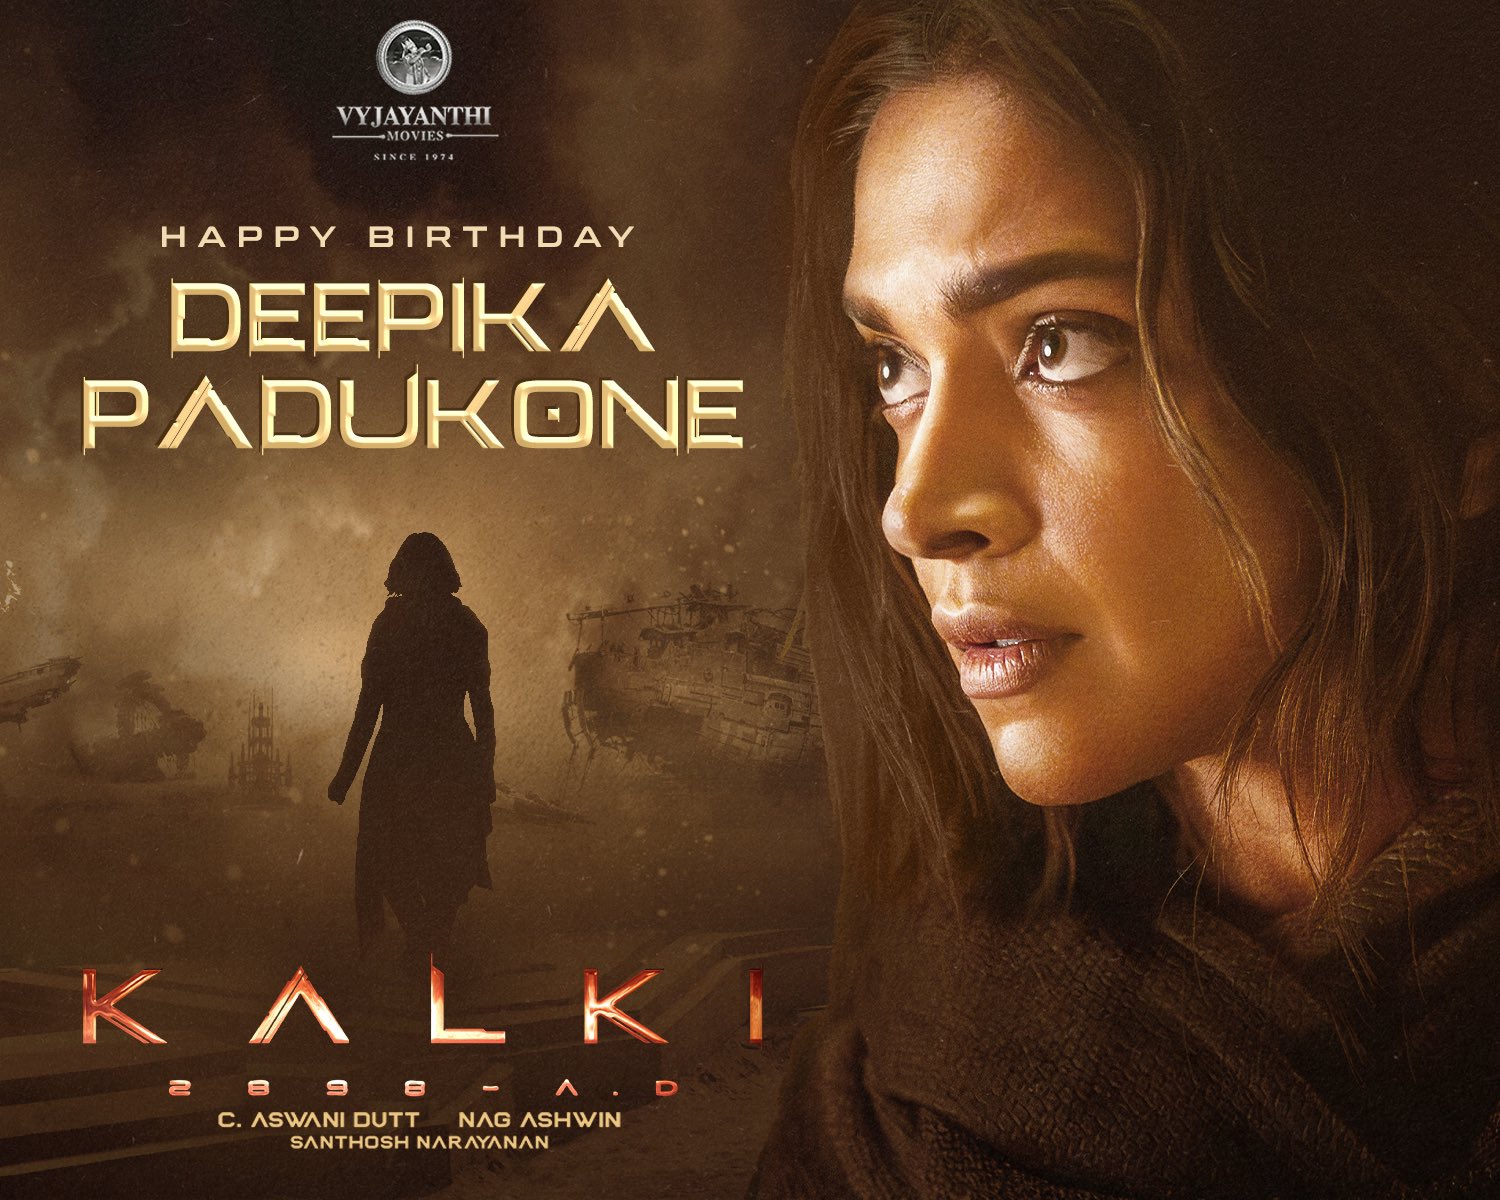 Poster release from Prabhas Kalki movie on the occasion of Deepika Padukone birthday